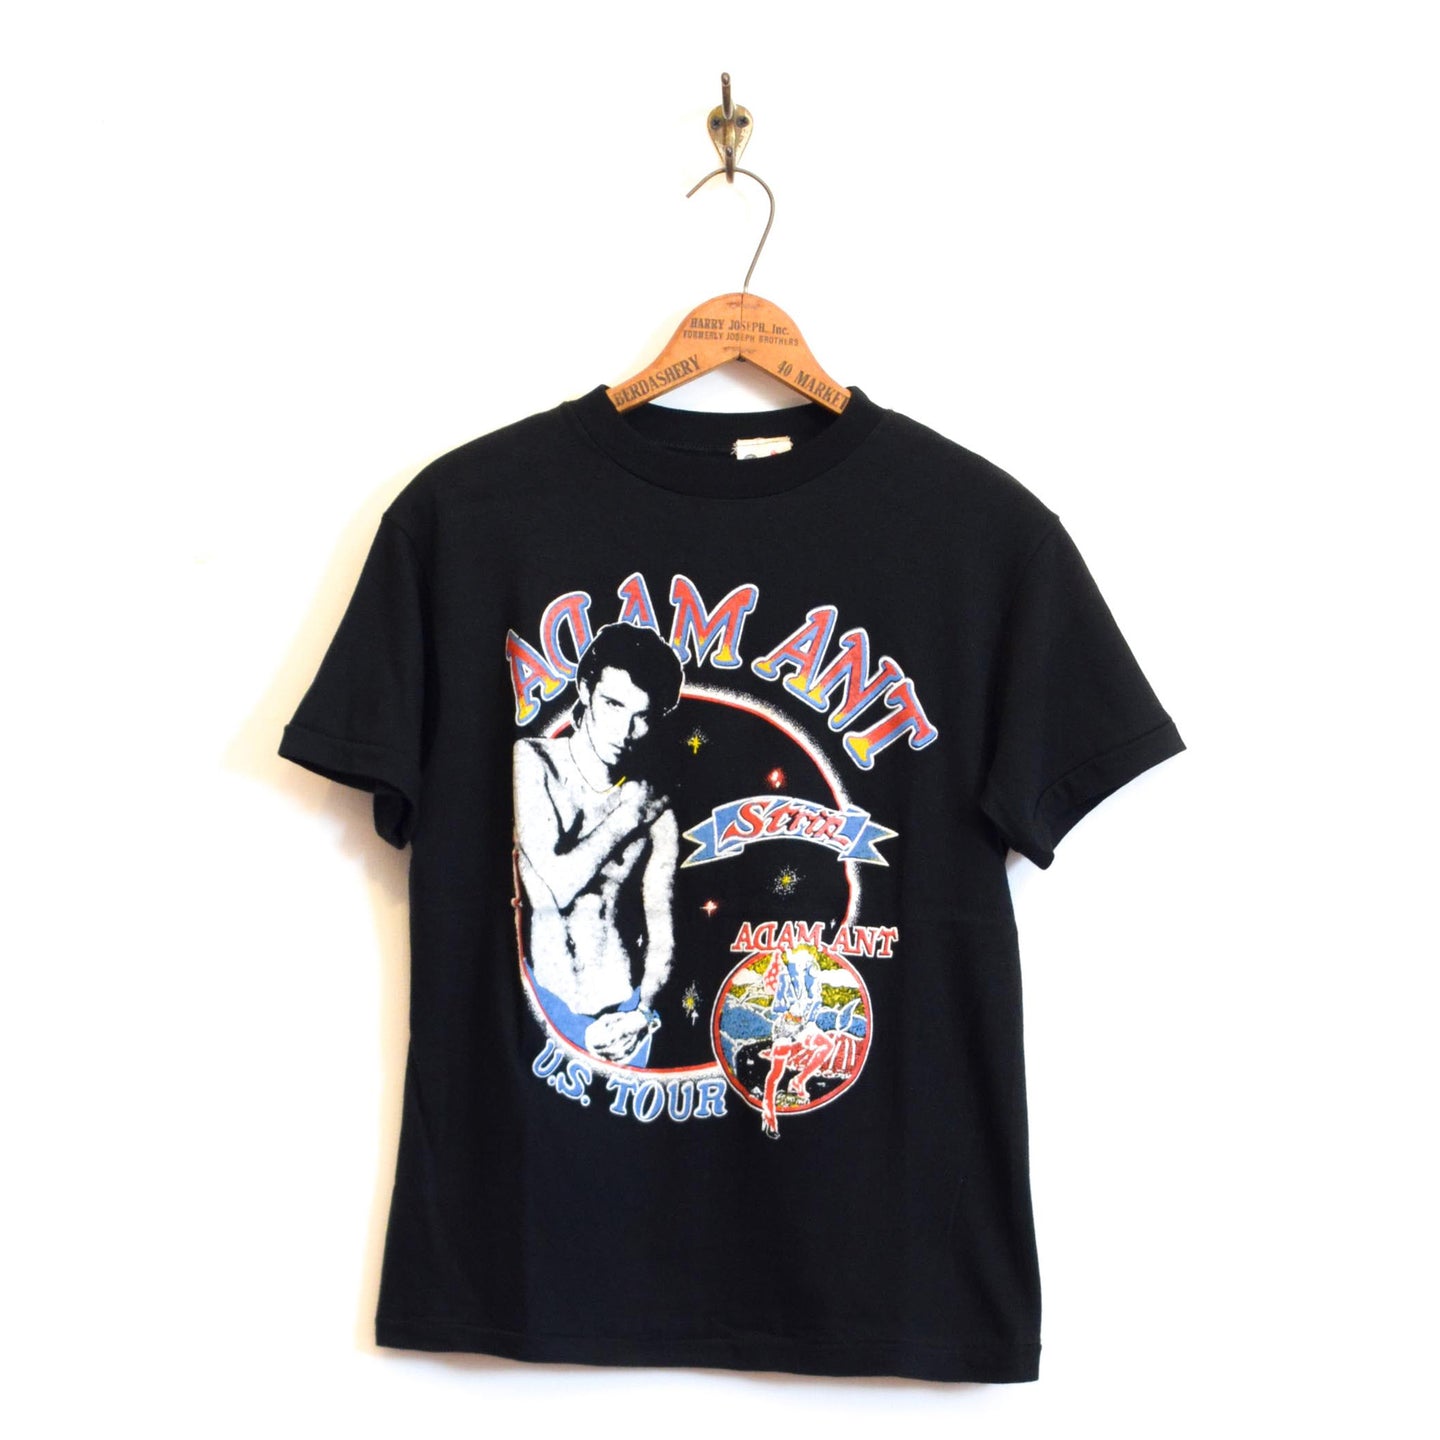 Popular - Adam Ant U.S Tour Bootleg Tee Shirt